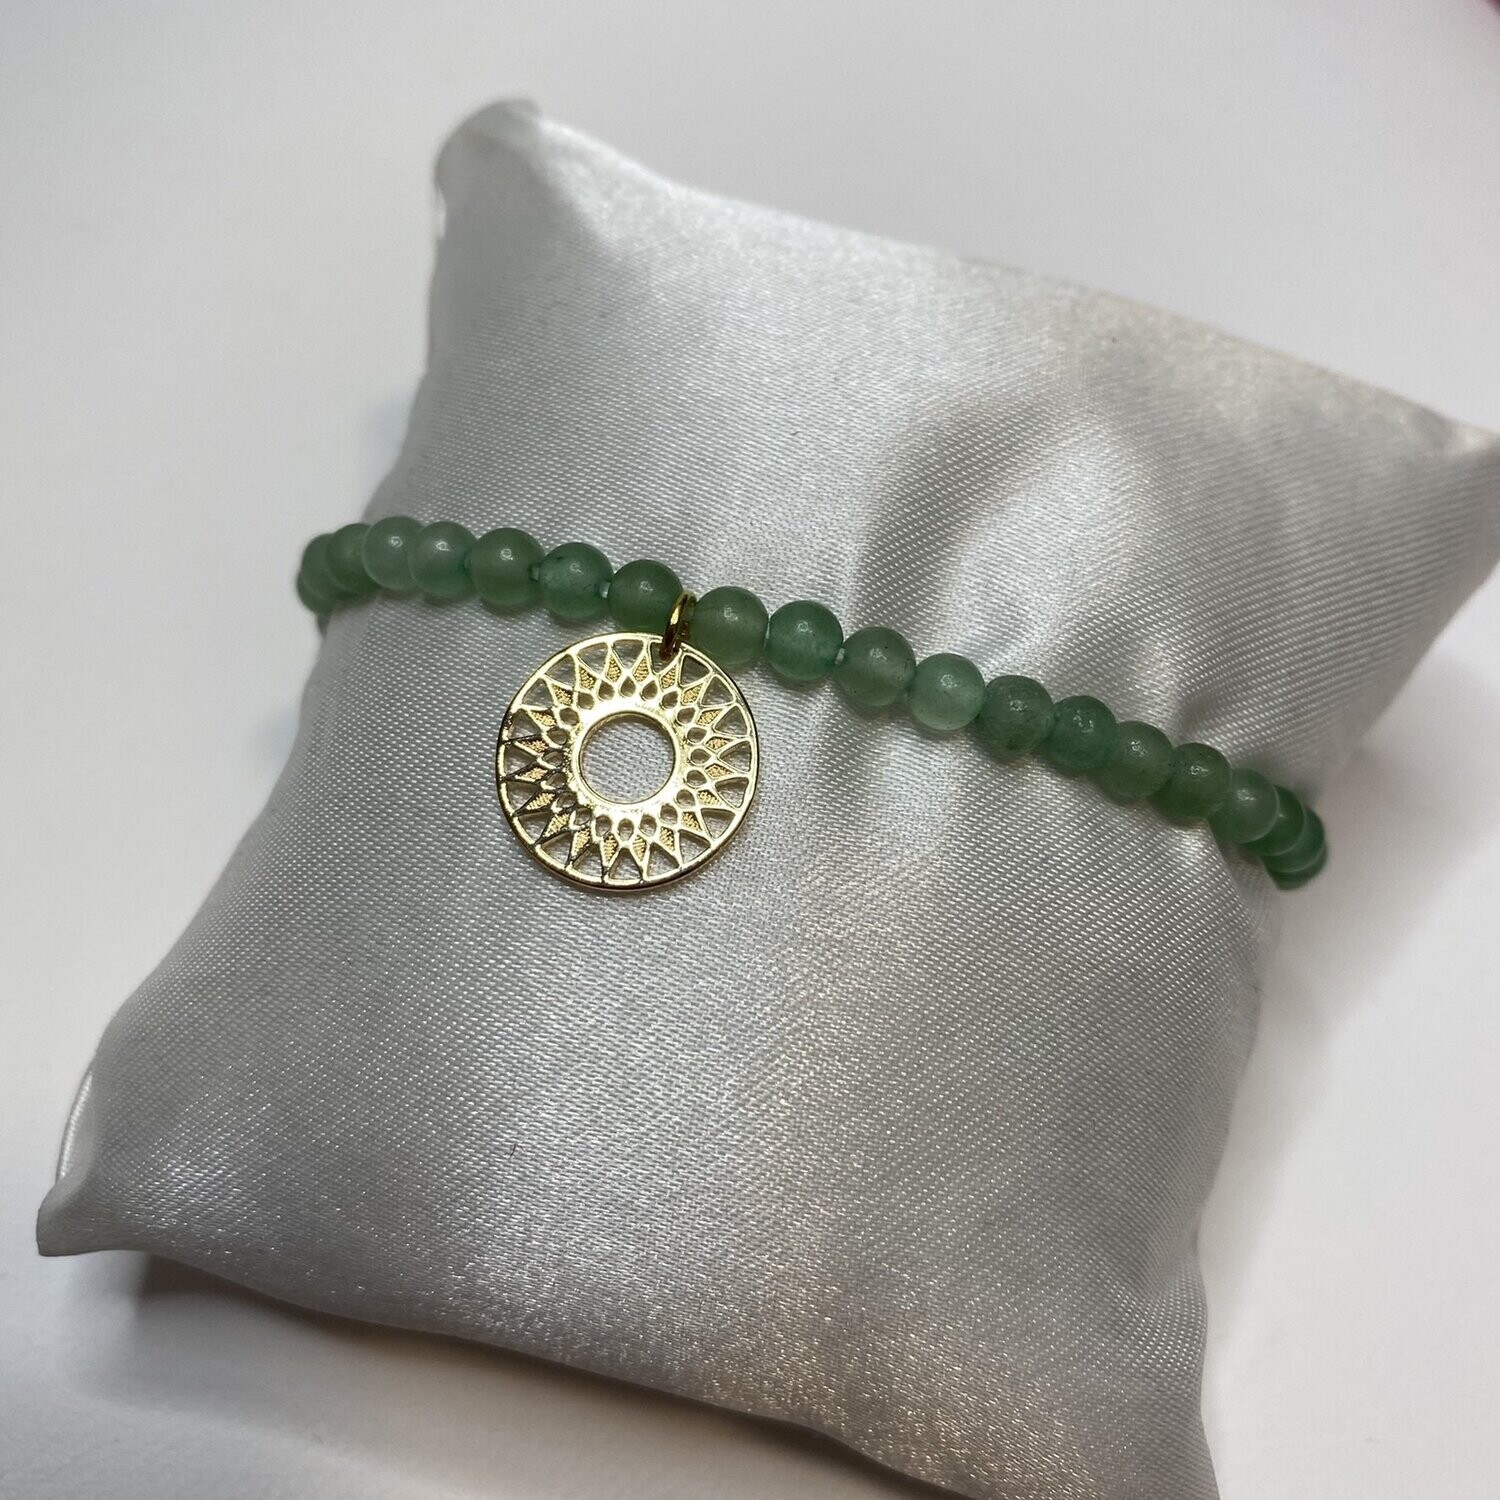 Bracelet de Julia soleil en plaqué or et aventurine verte